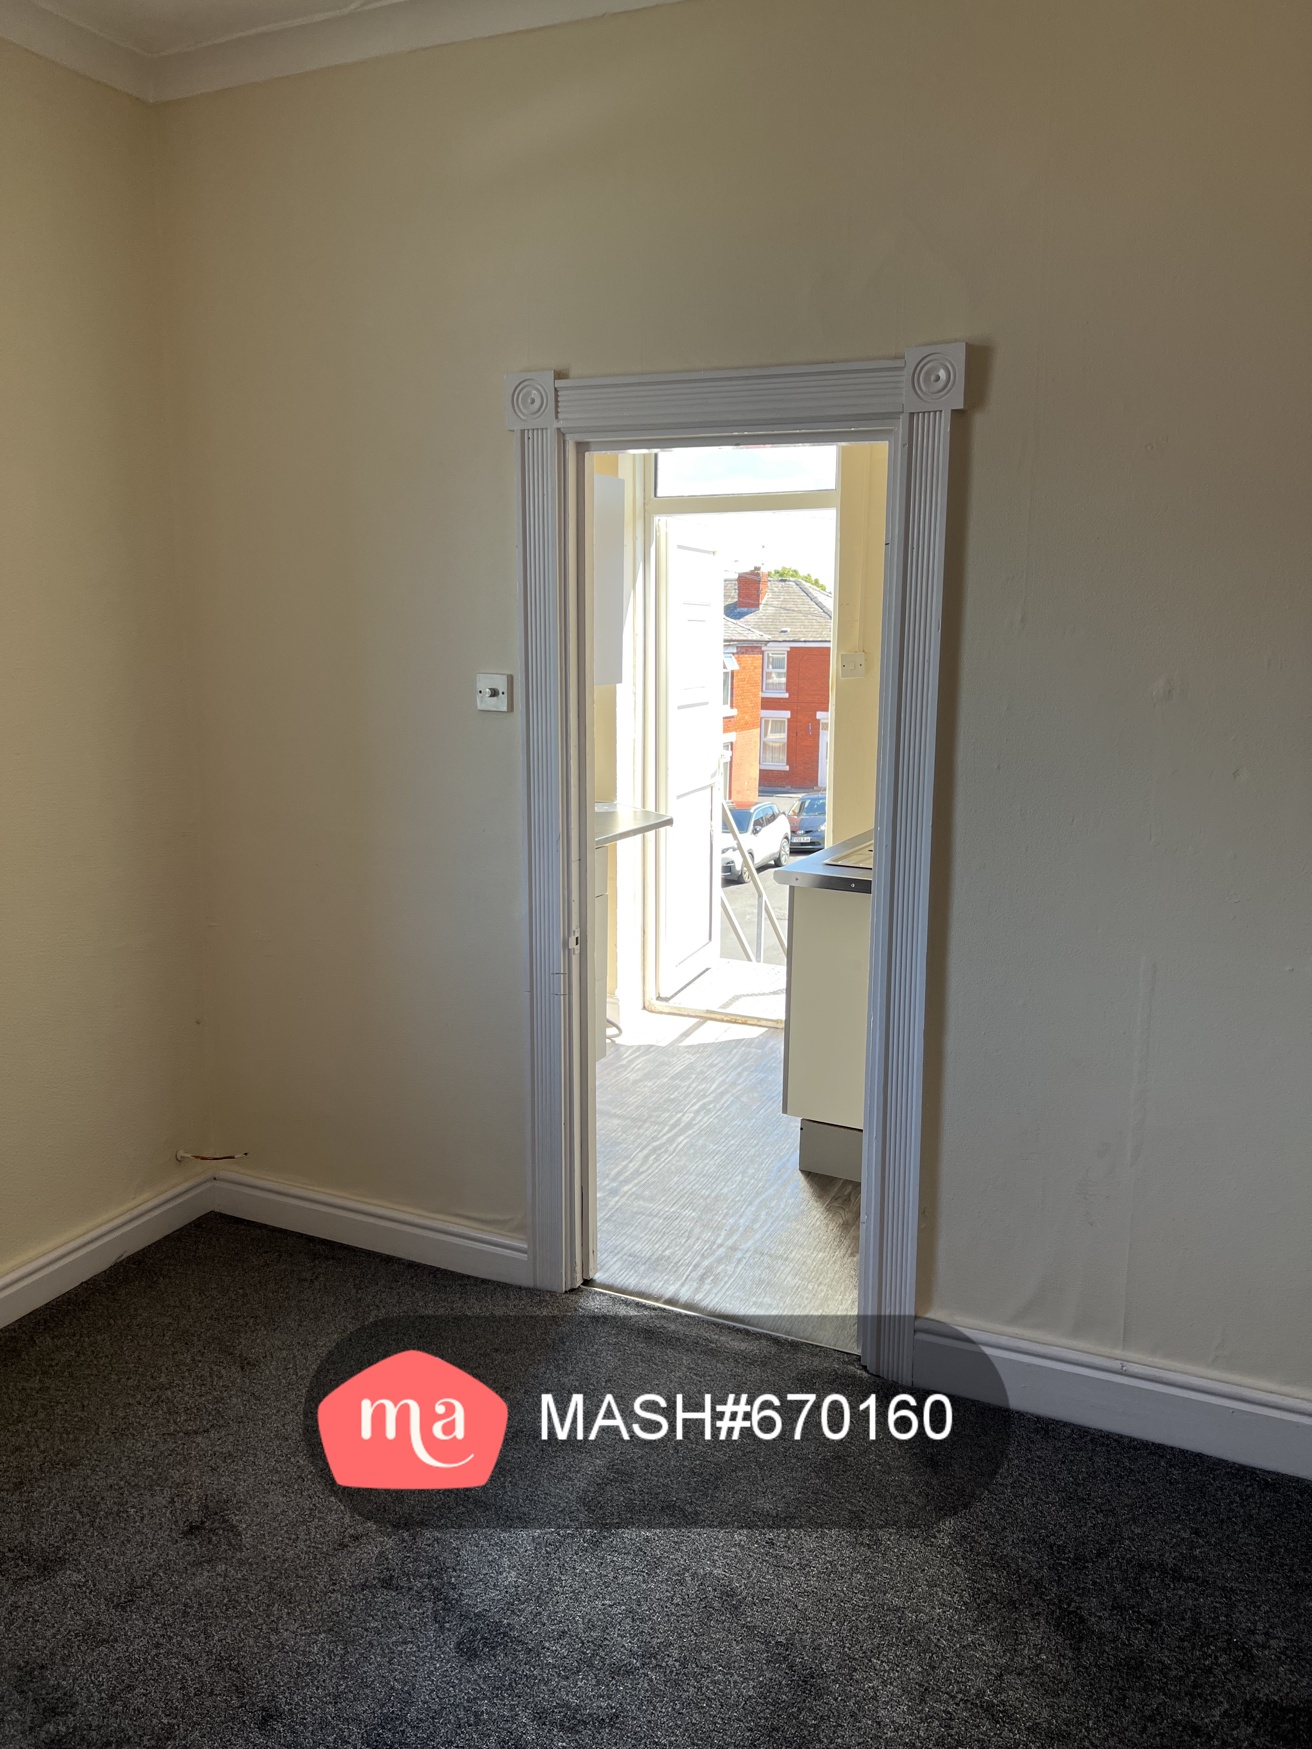 1 Bedroom Flat to rent in Blackpool - Mashroom